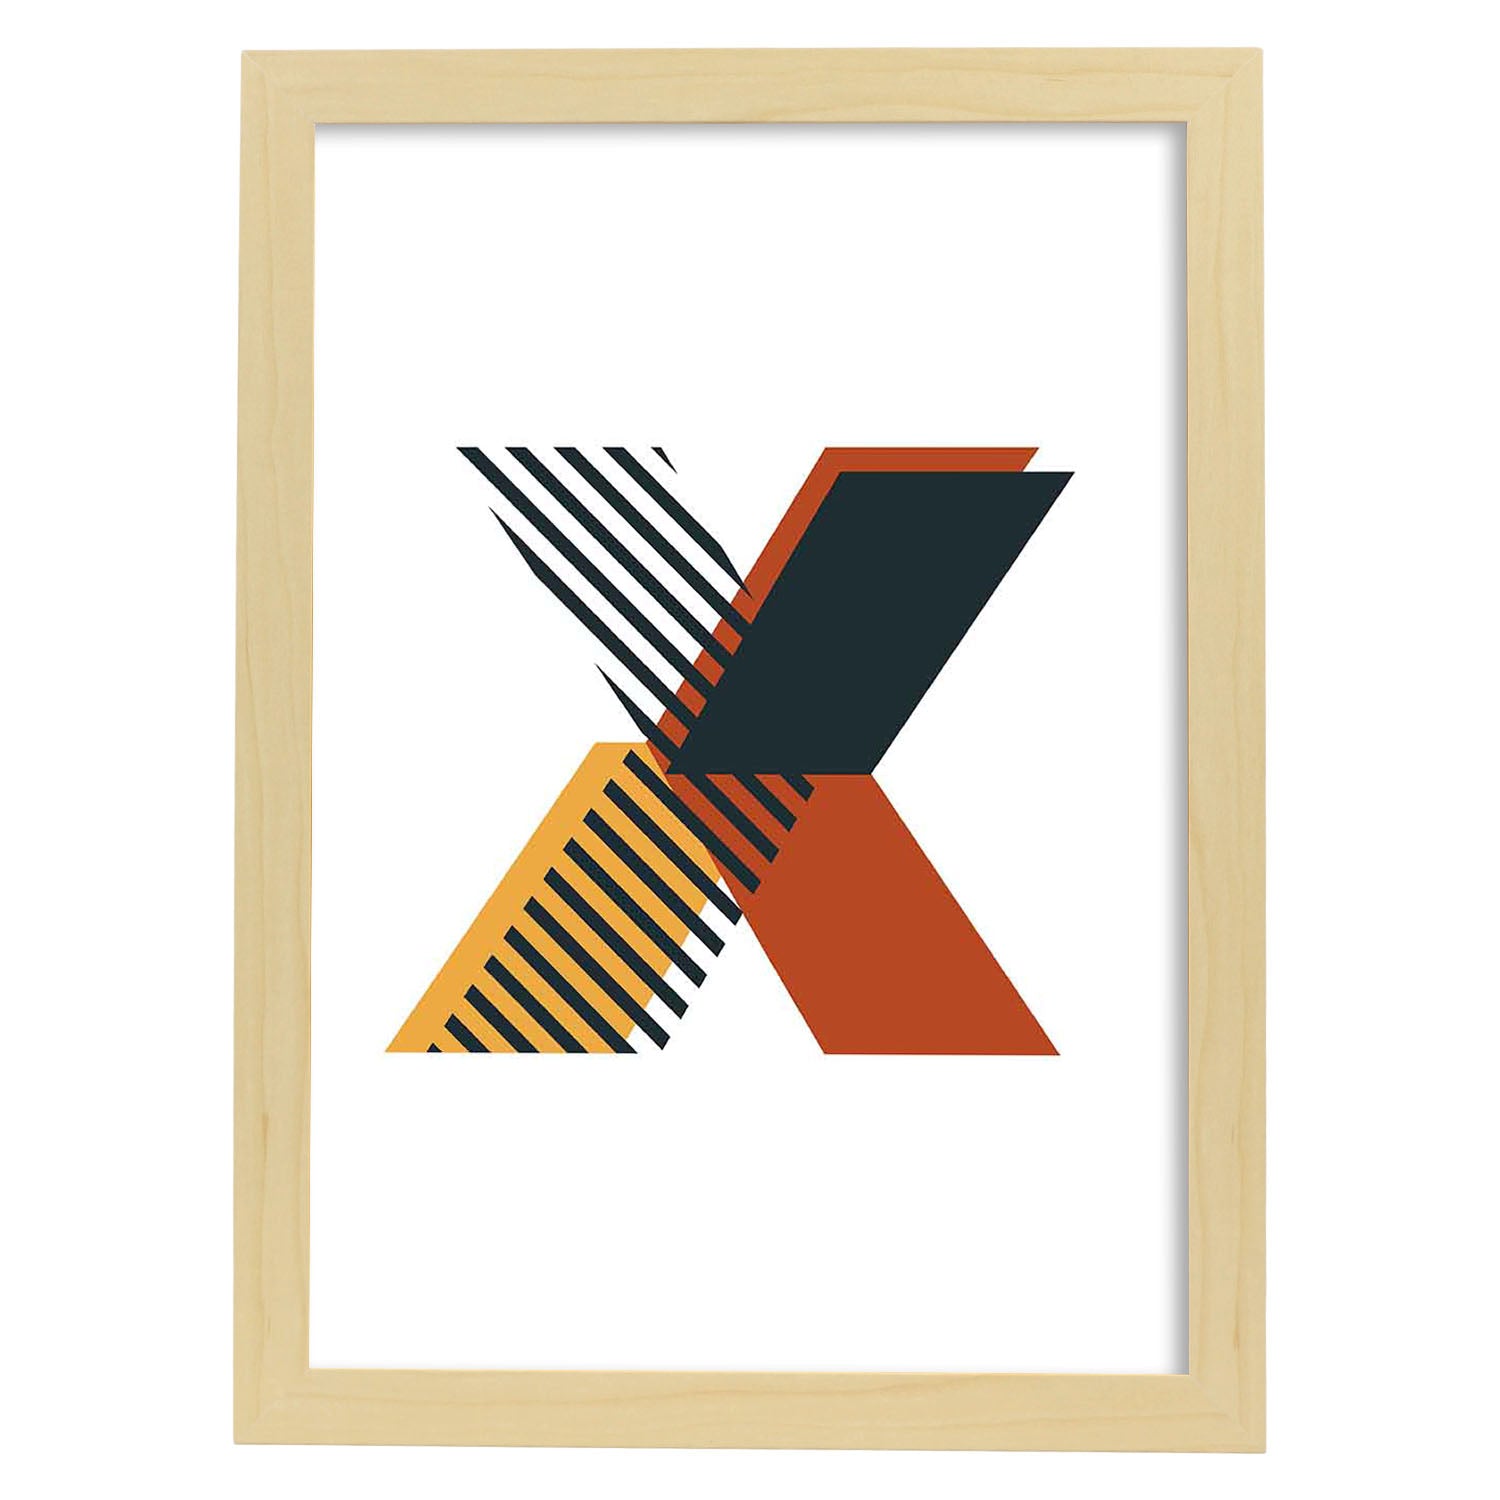 Poster de letra X. Lámina estilo Geometria con imágenes del alfabeto.-Artwork-Nacnic-A3-Marco Madera clara-Nacnic Estudio SL